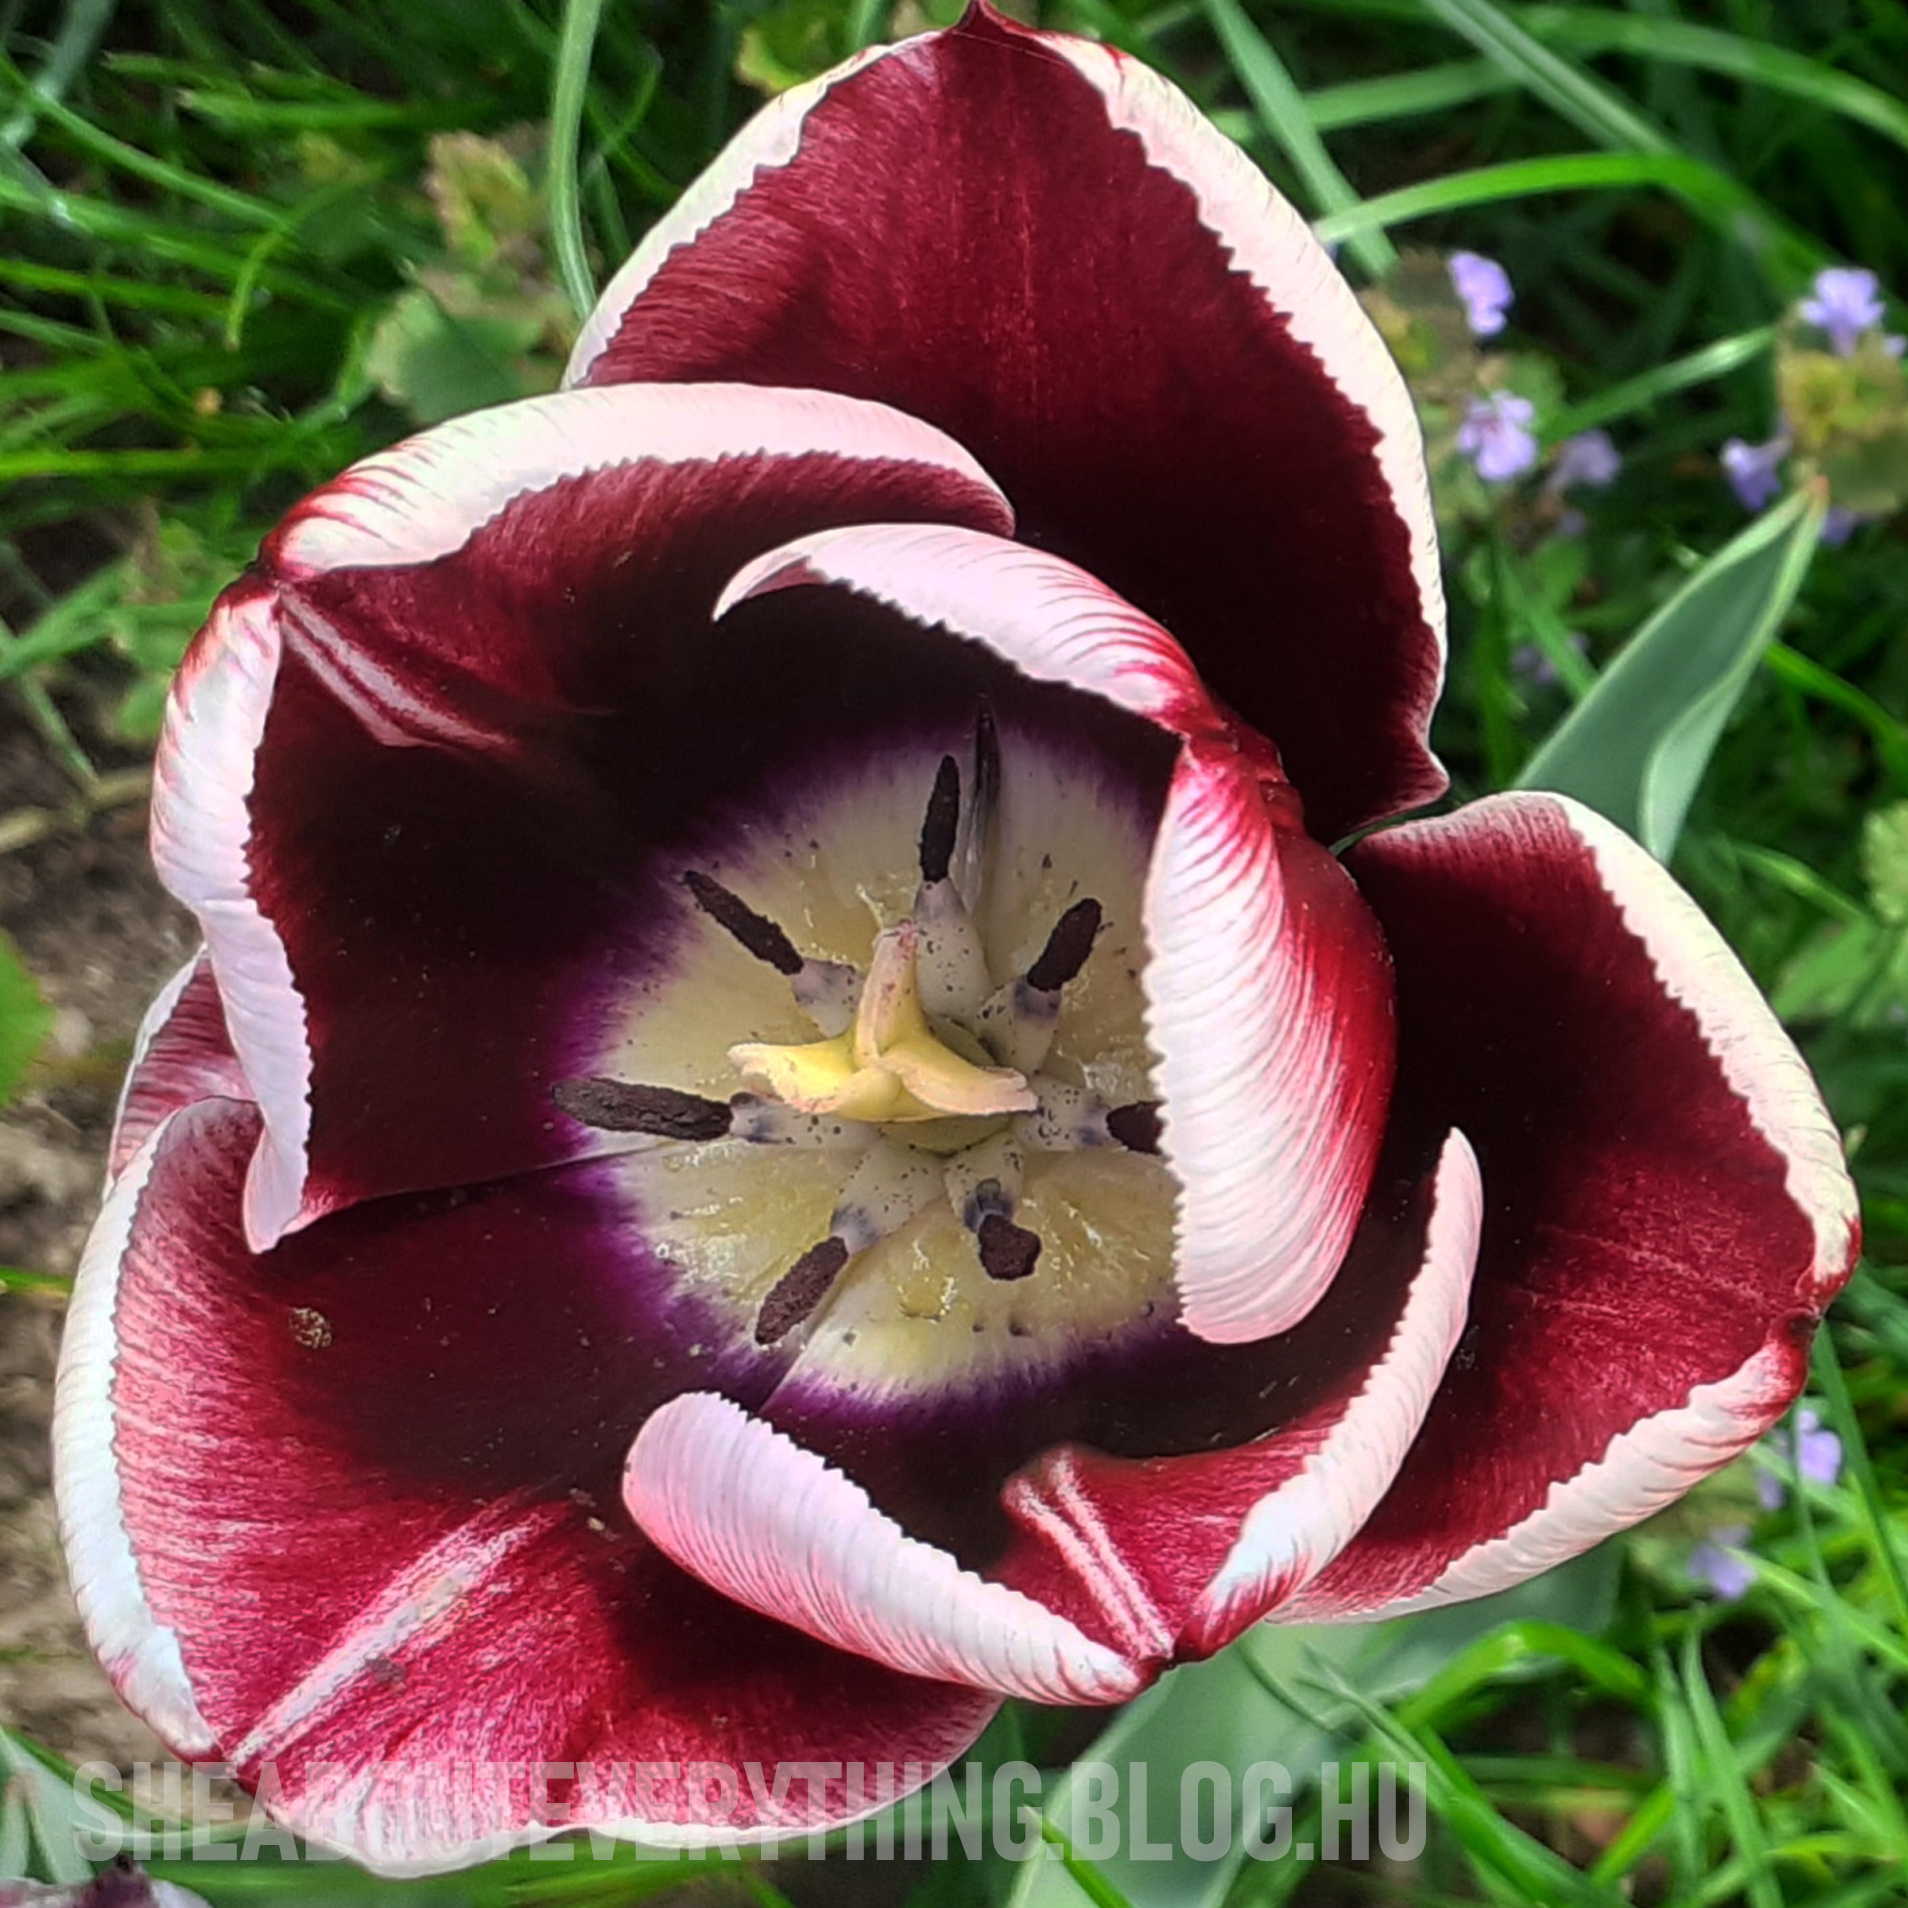 kertesz-blog-gardening-tulipan-4.jpg